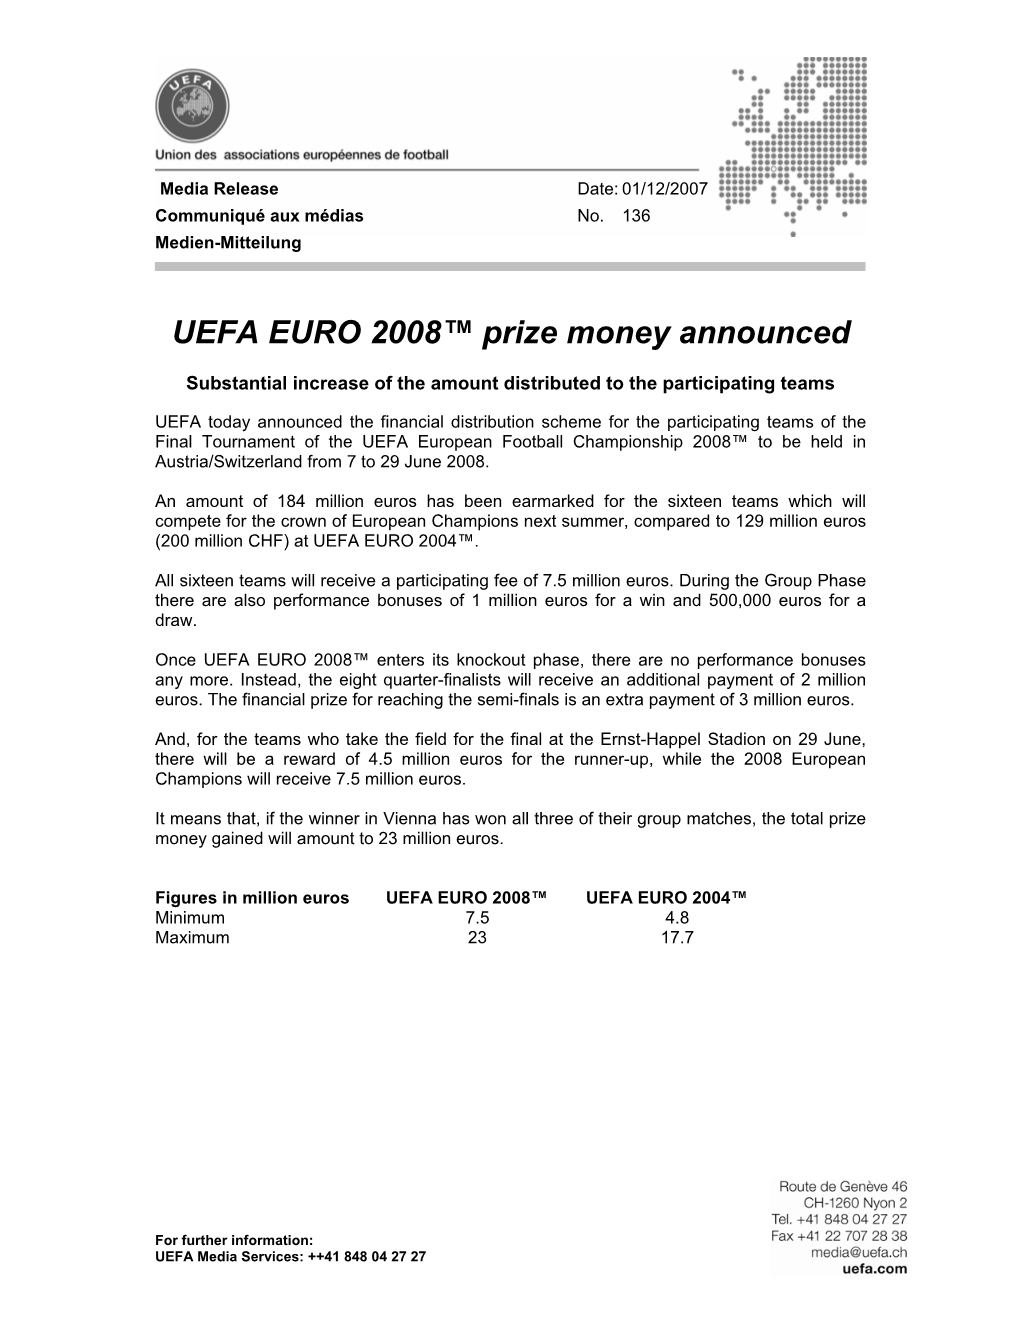 UEFA EURO 2008™ Prize Money Announced